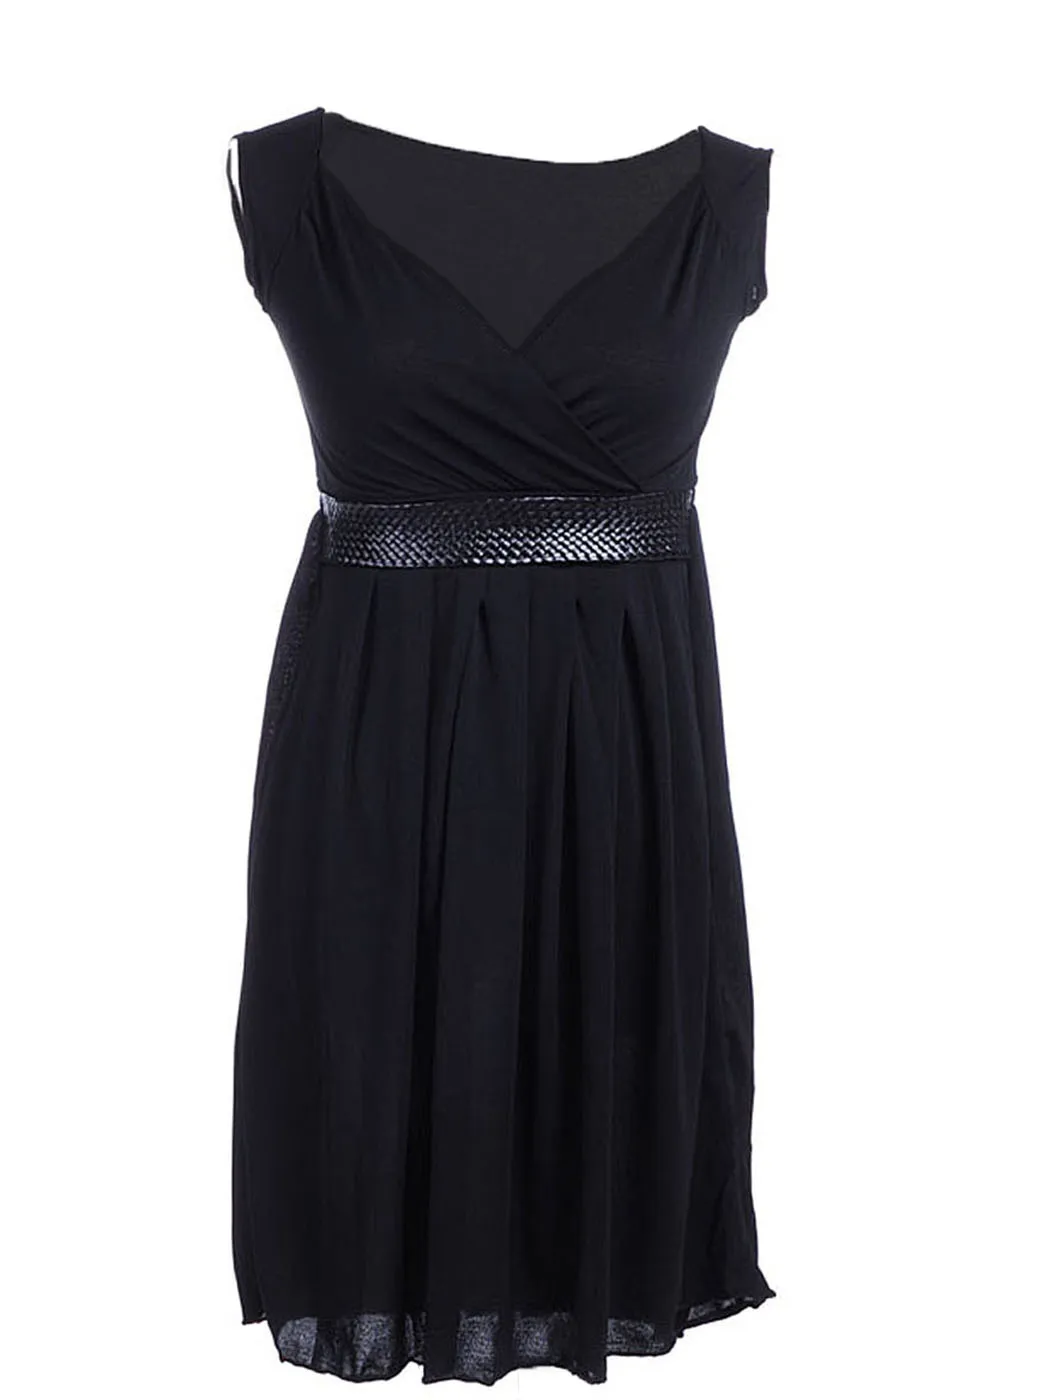 

Free Size Fit Black Drape Wrap Front Bodice Faux Snake Skin Belted Dress Sexy Elegant Short Mini Party Dresses